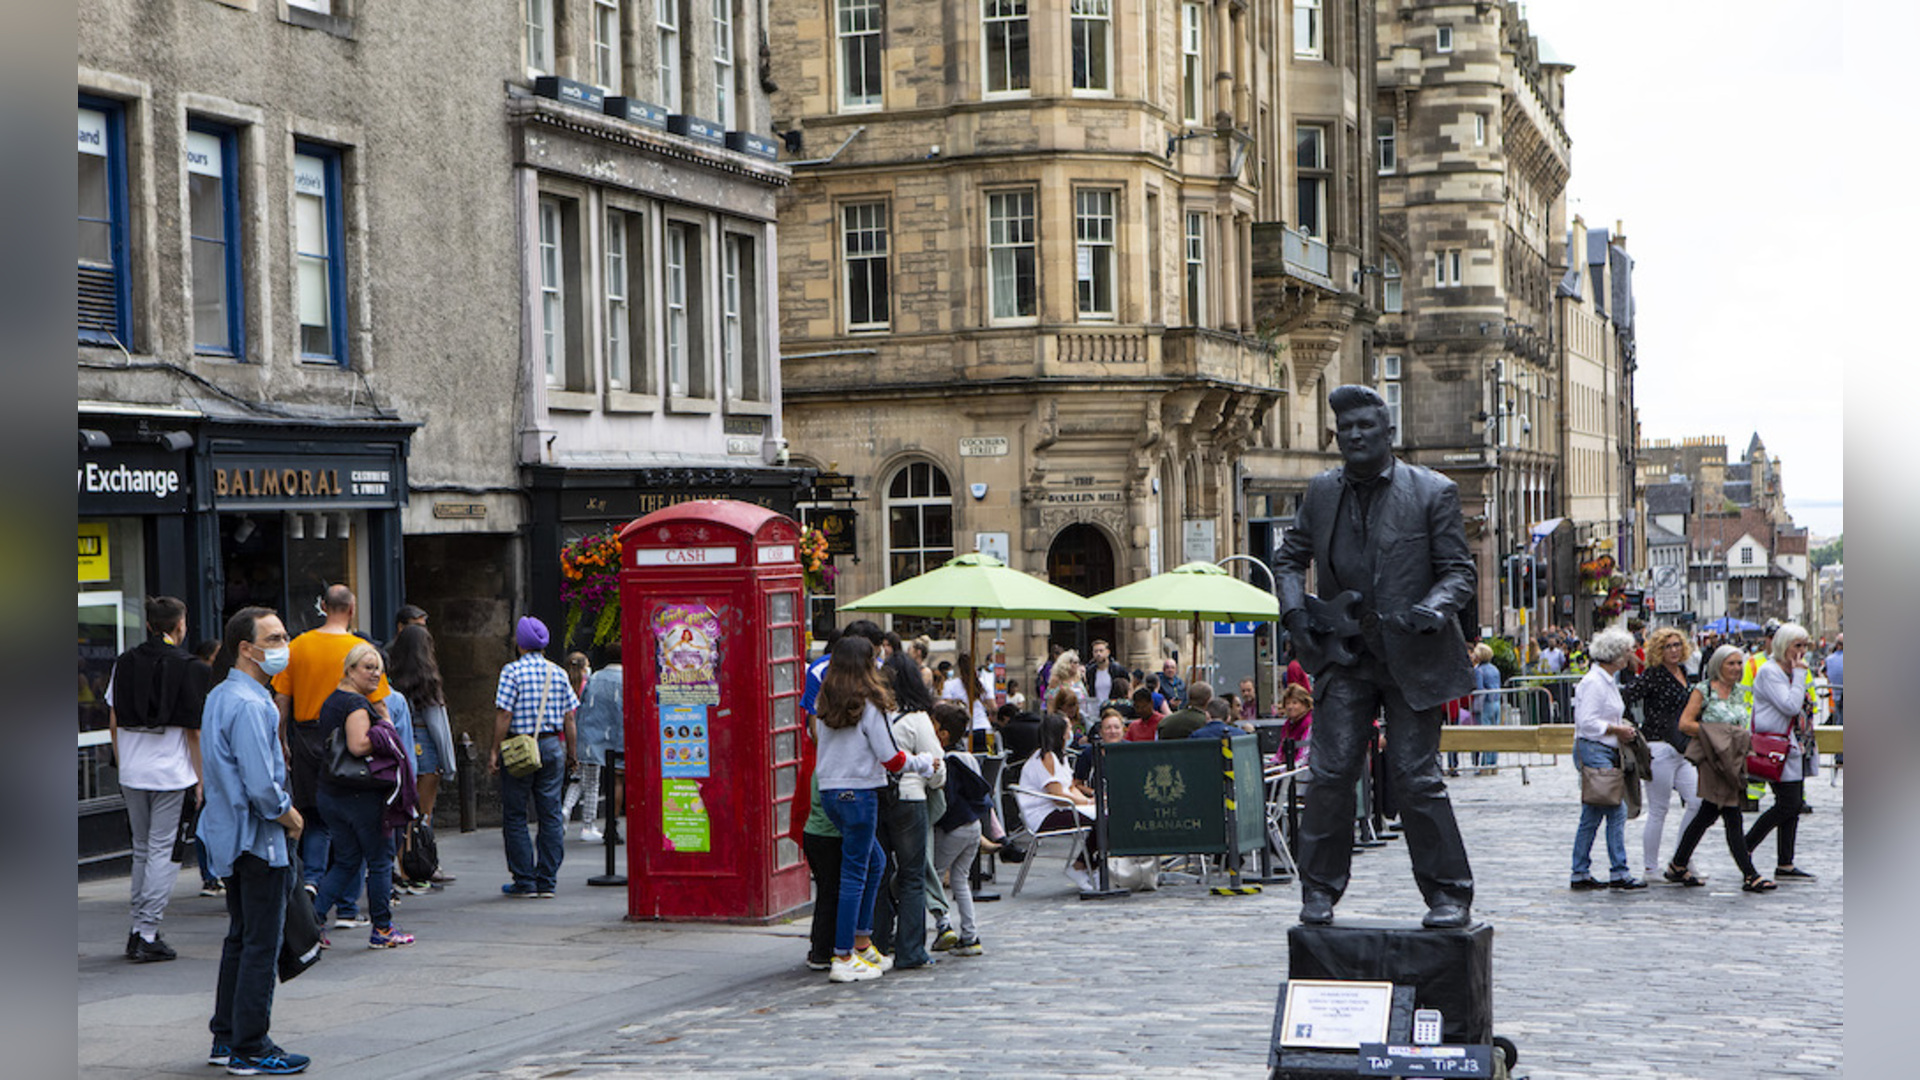 The Ultimate City Break: 48 Hours in Edinburgh